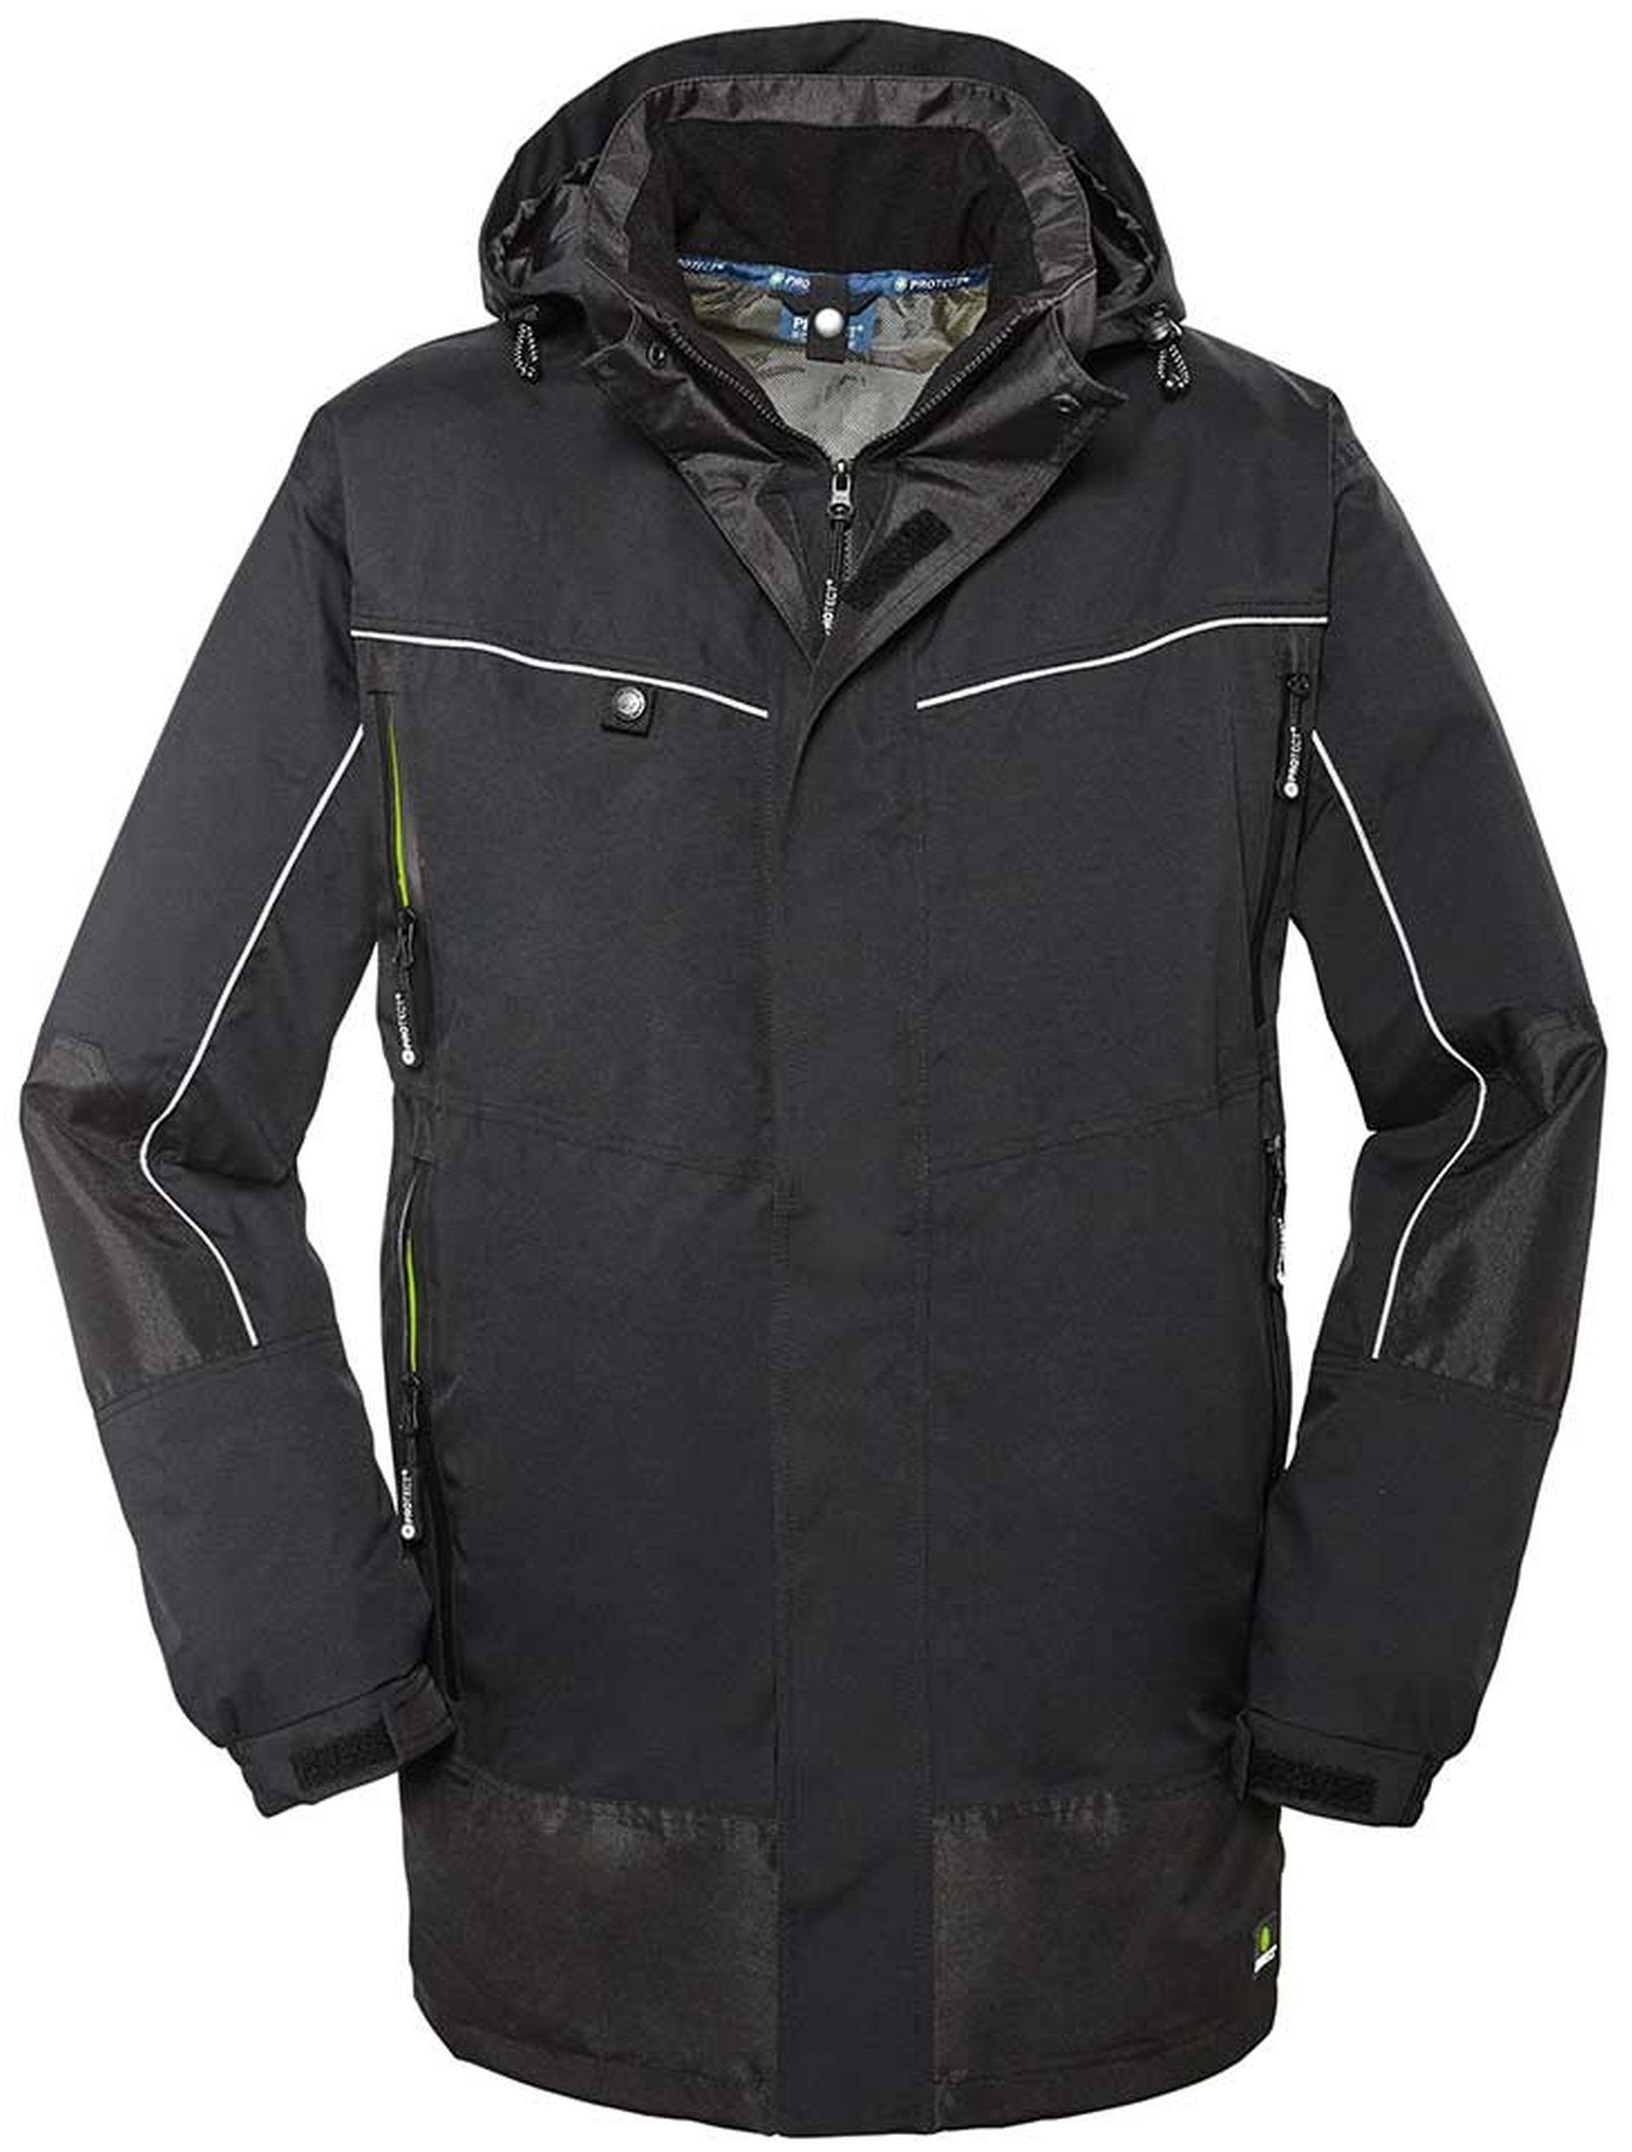 BIG-4-Protect-Kälteschutz, Wetterschutz-Jacke, PHILLY, schwarz
